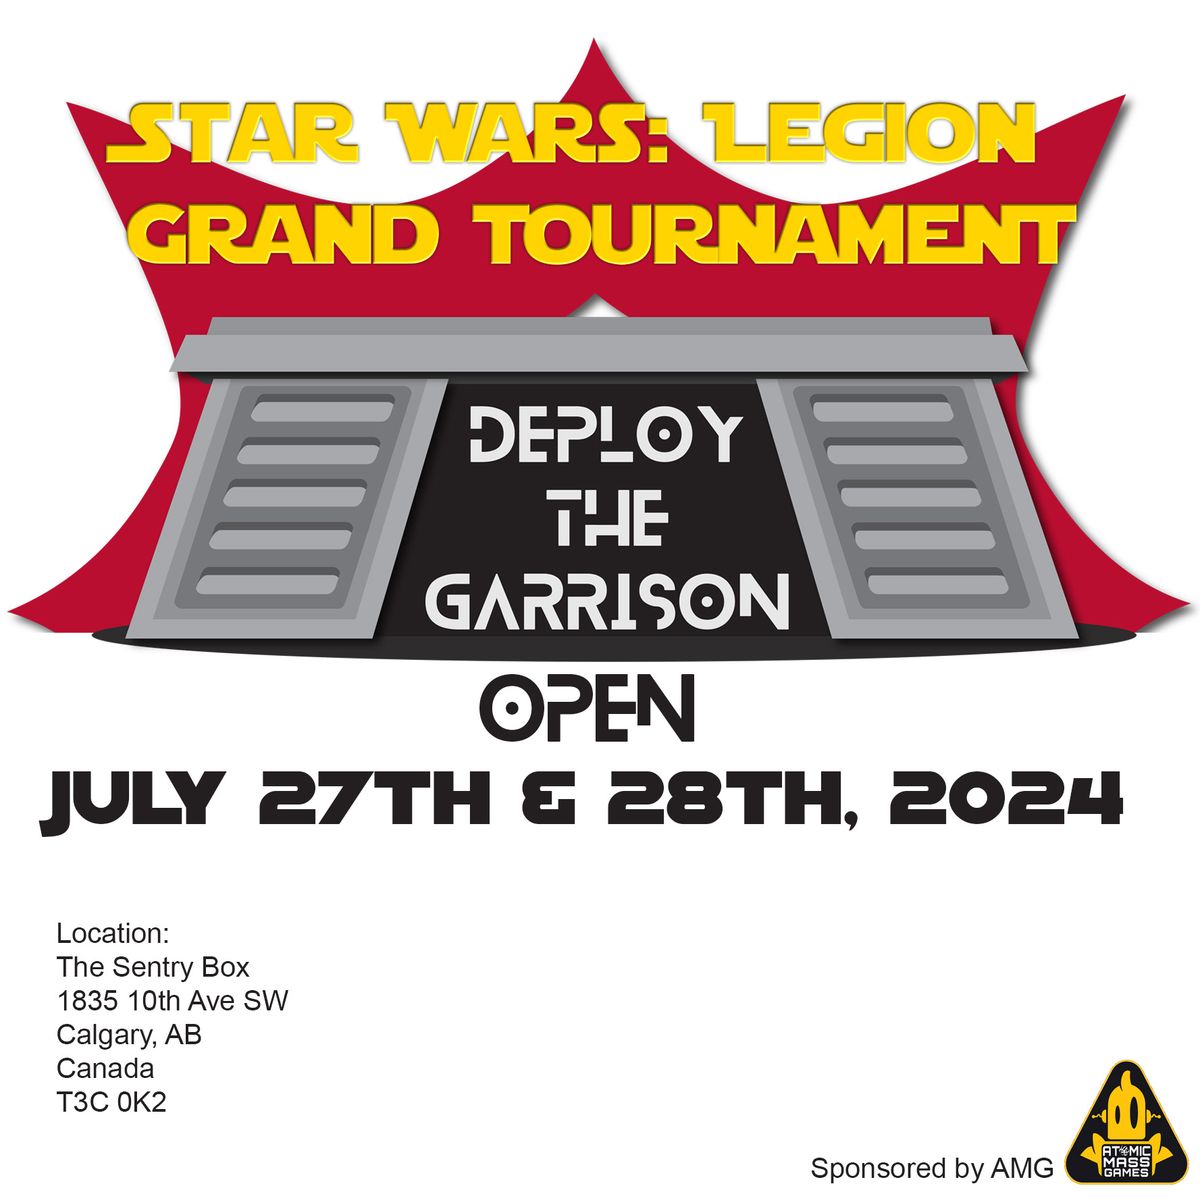 Deploy the Garrison Open - Star Wars: Legion Grand Tournament, sponsored by AMG 